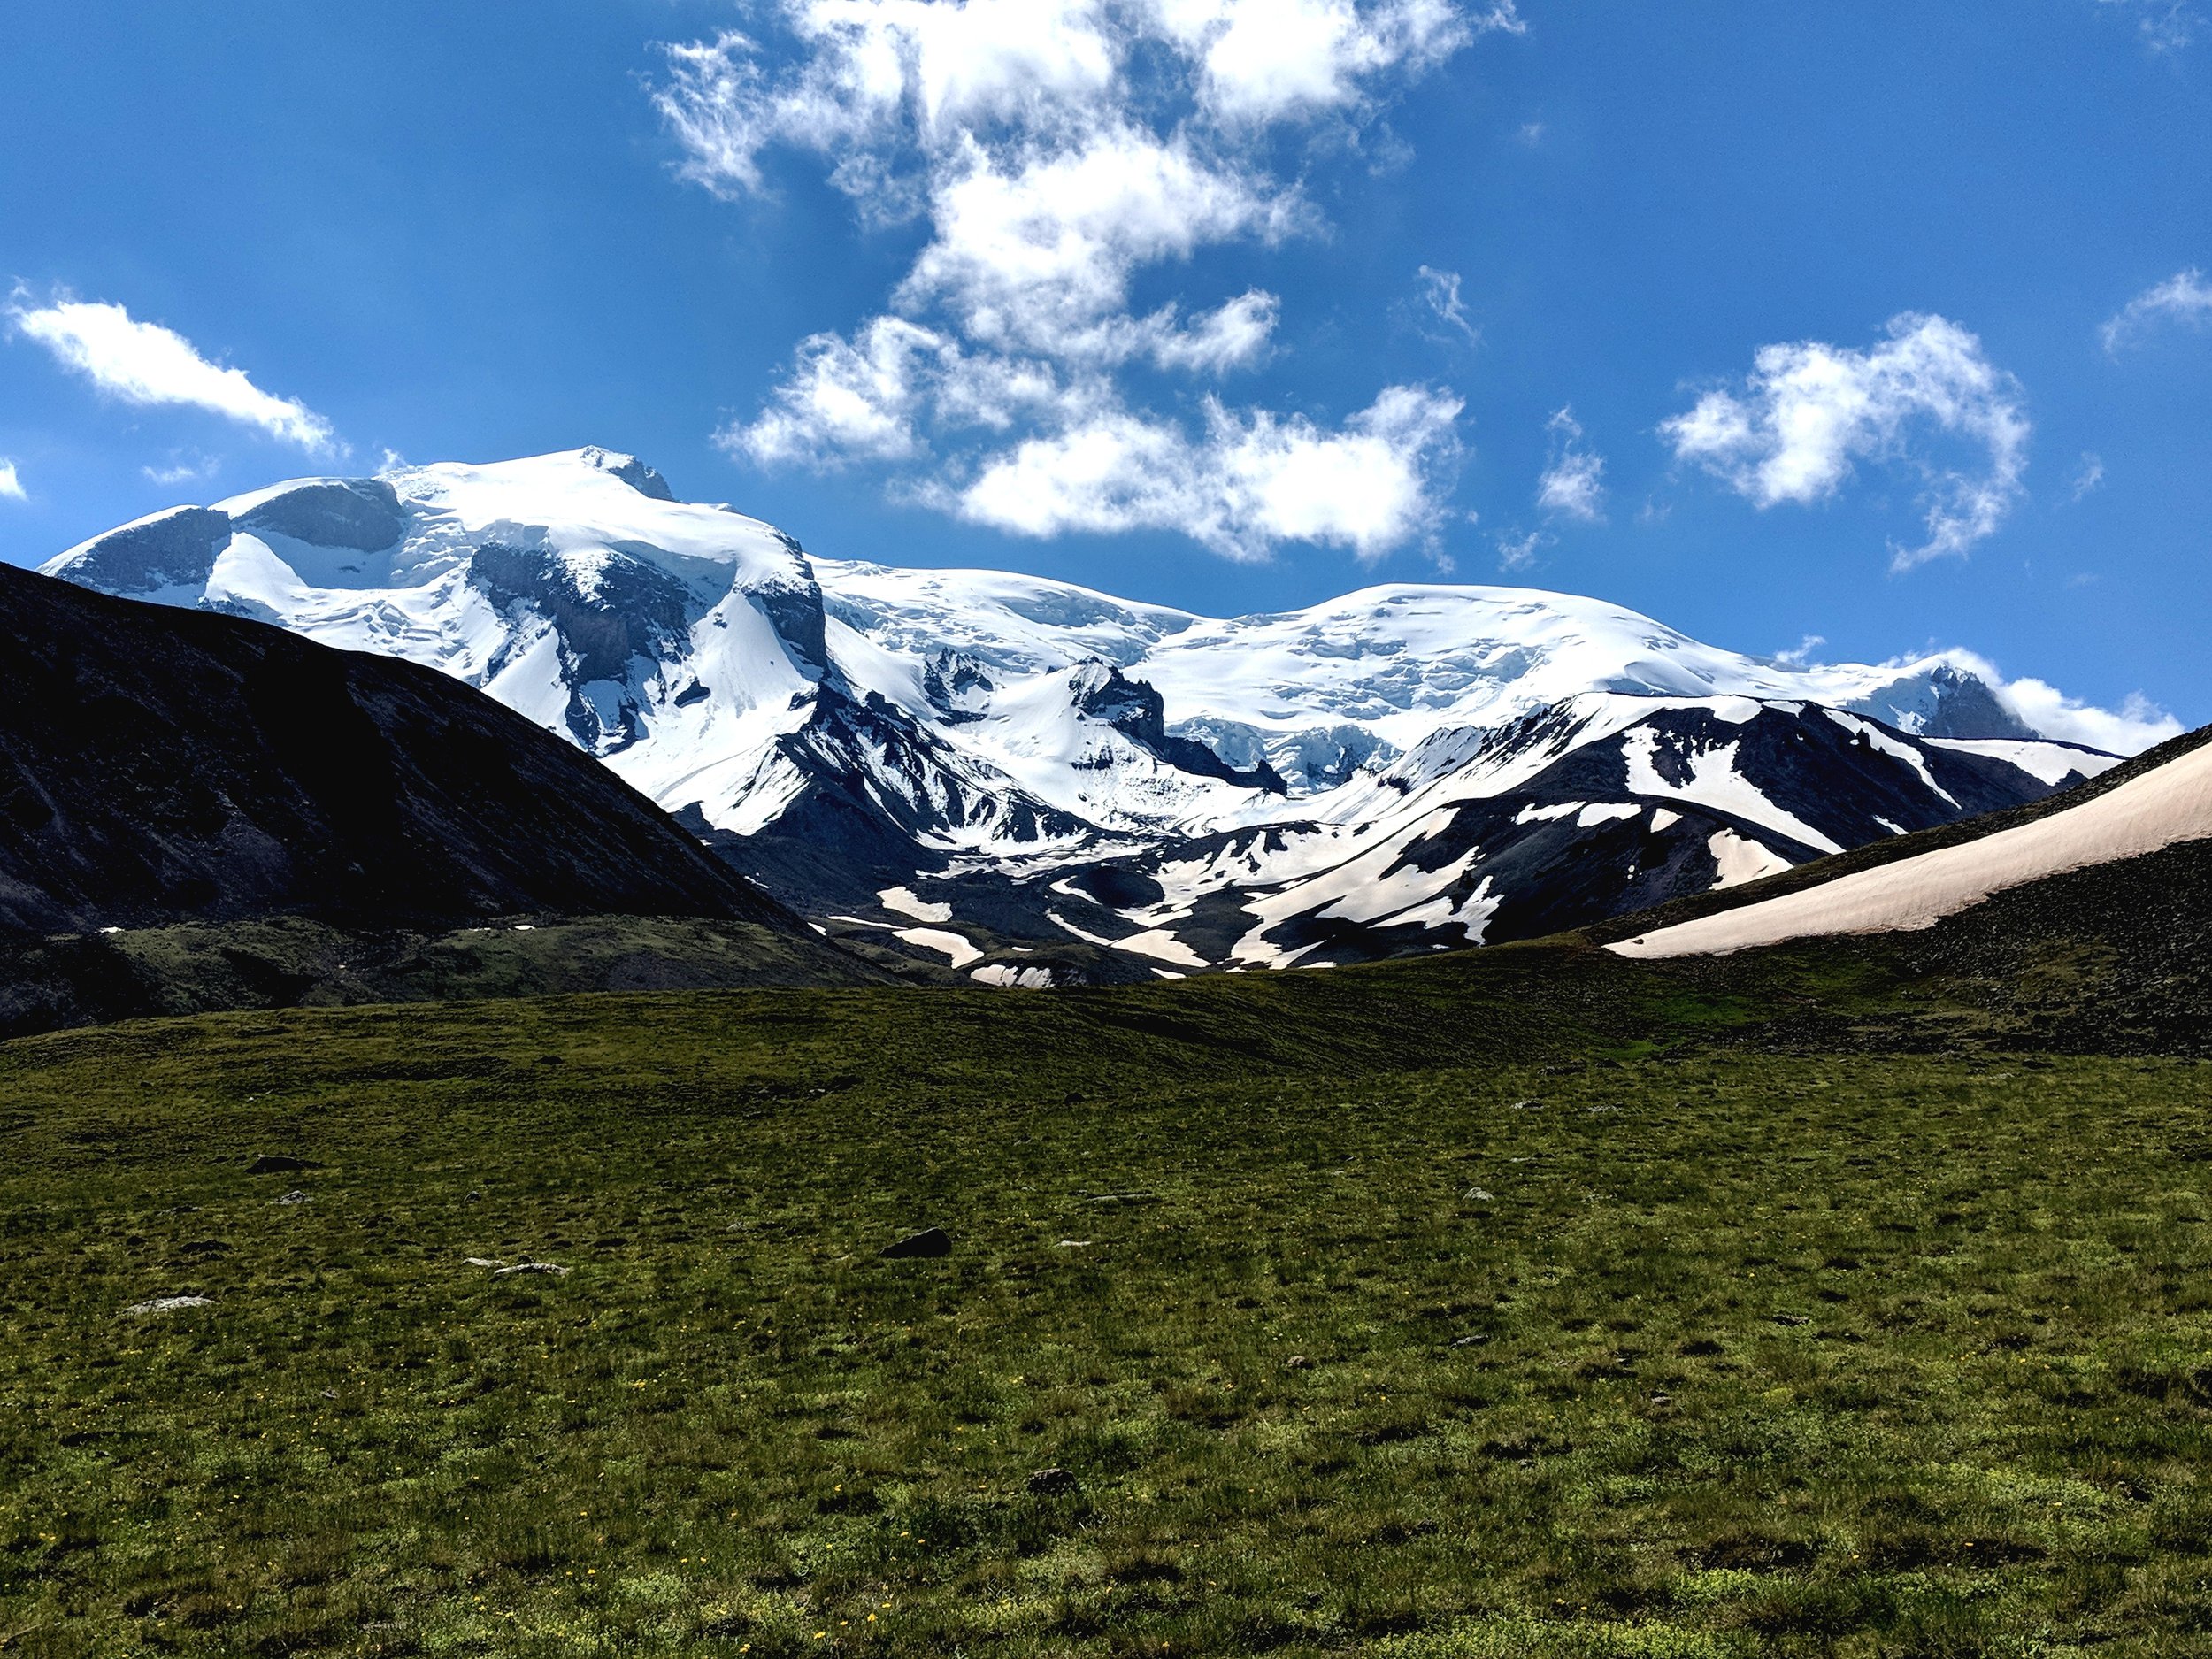 2022.03.24 Elbrus4Alpinists Story (1).jpg